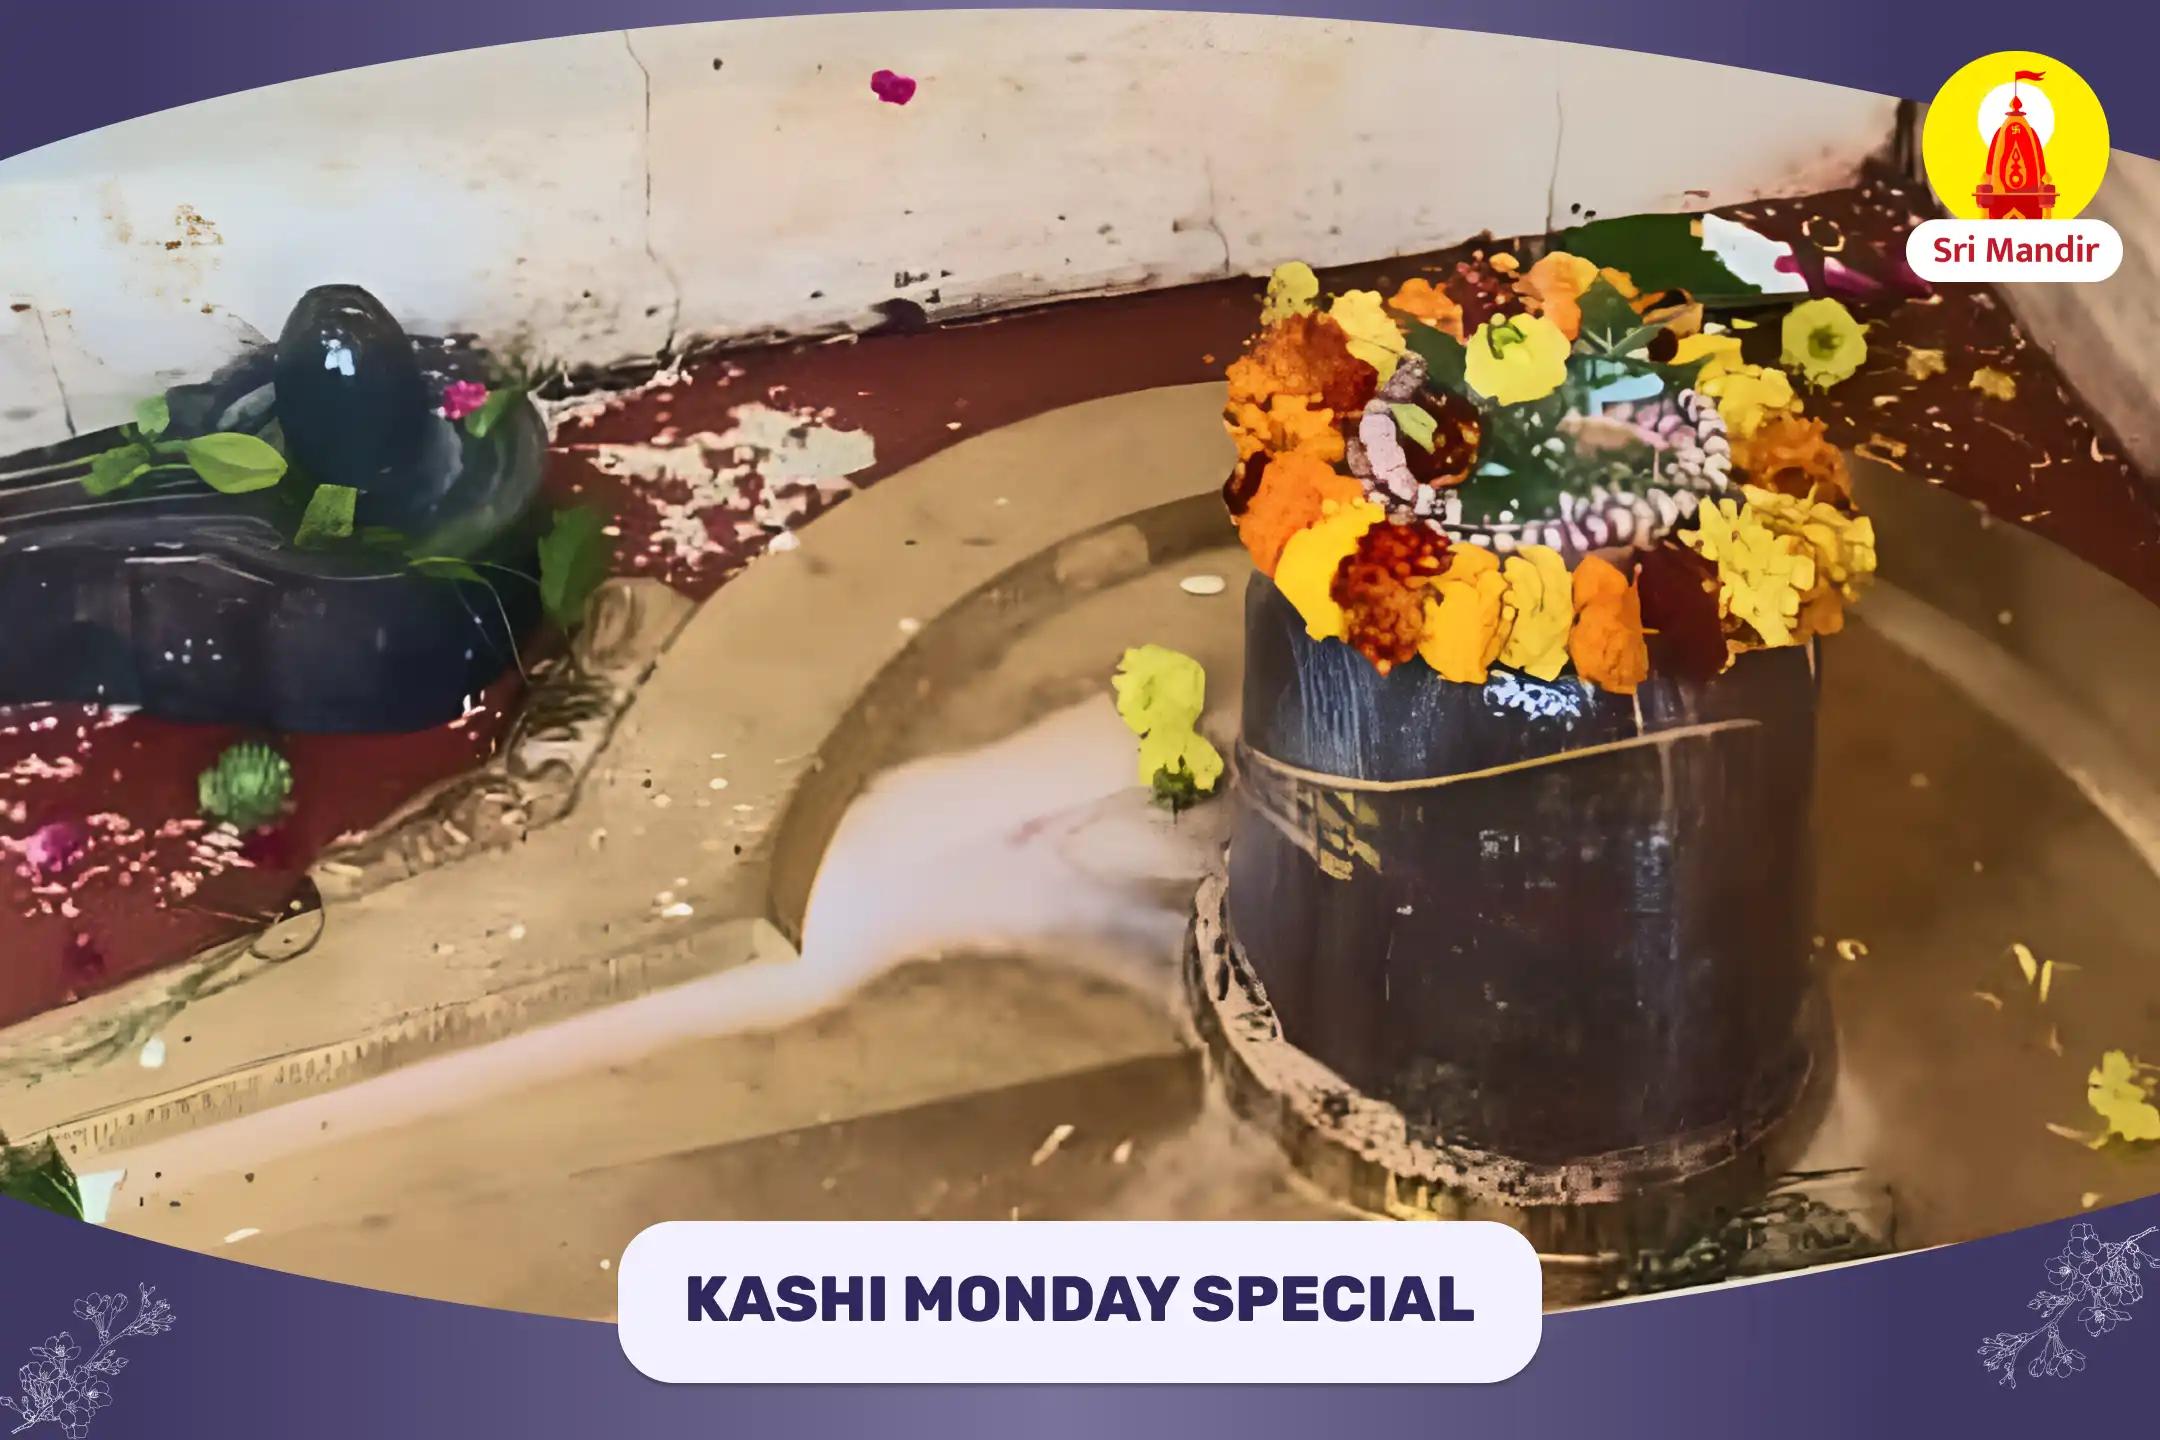  Kashi Monday Special Mahamrityunjay Yagya and Shiva Rudrabhishek for Good Health and Protection from Accidents